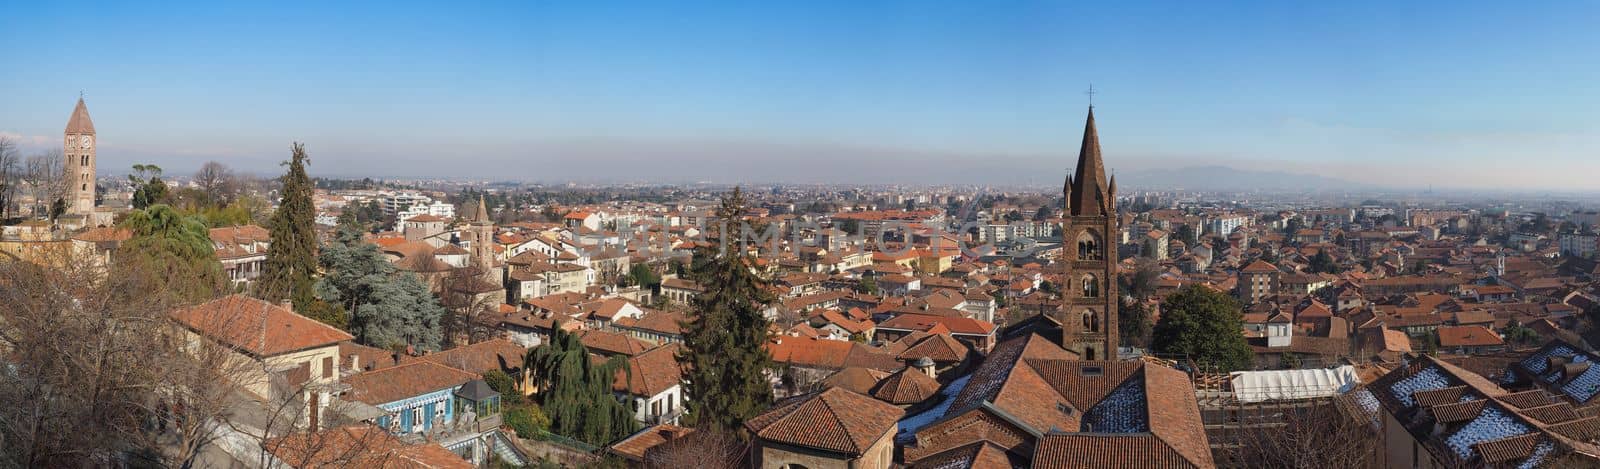 Aerial view of Rivoli by claudiodivizia